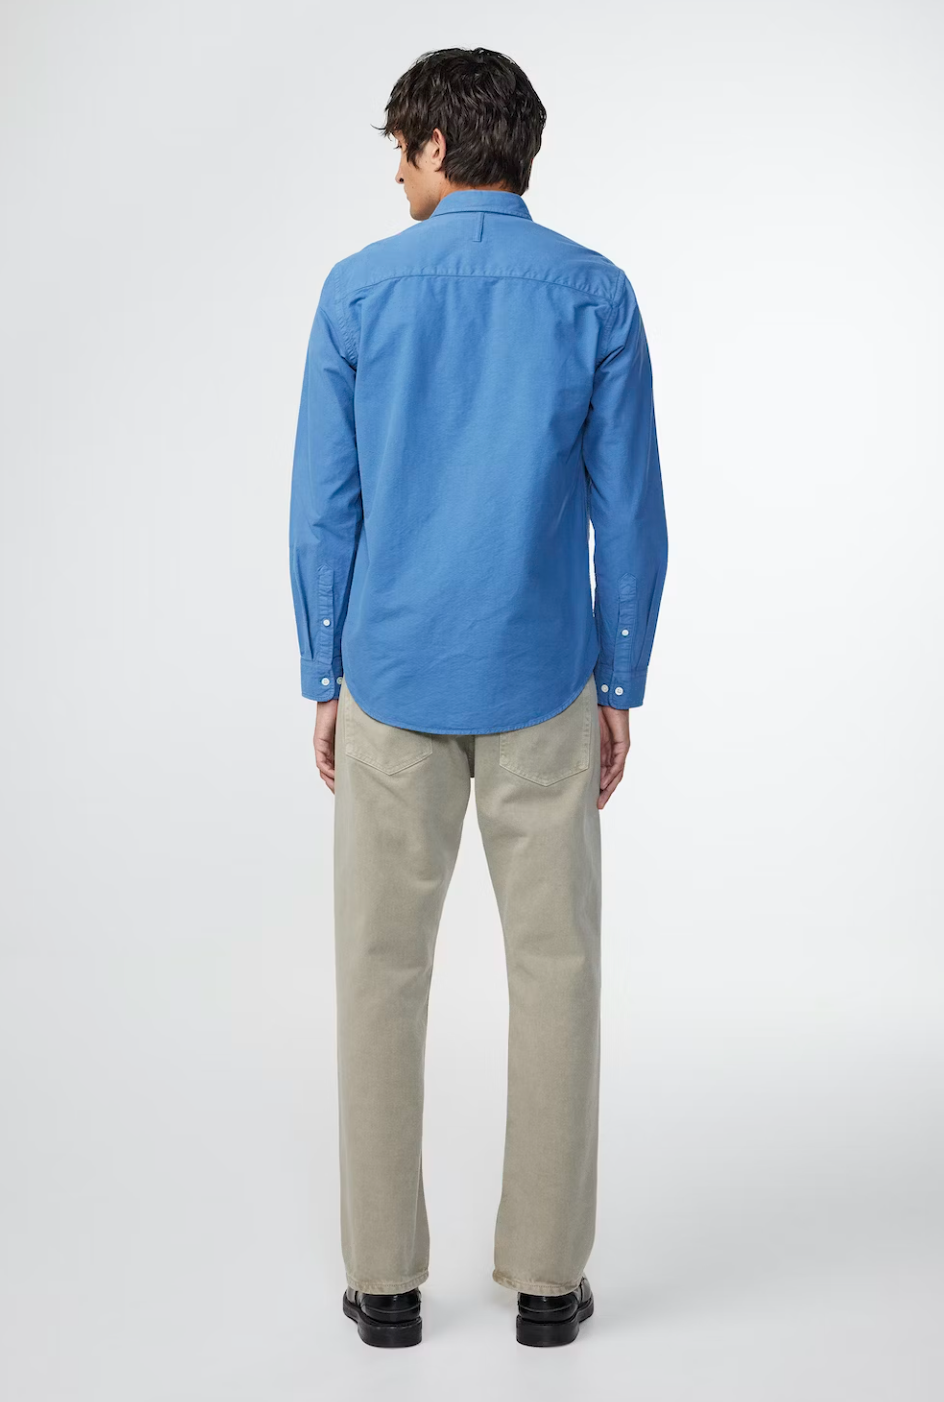 NN07 Arne LS Shirt Gray Blue